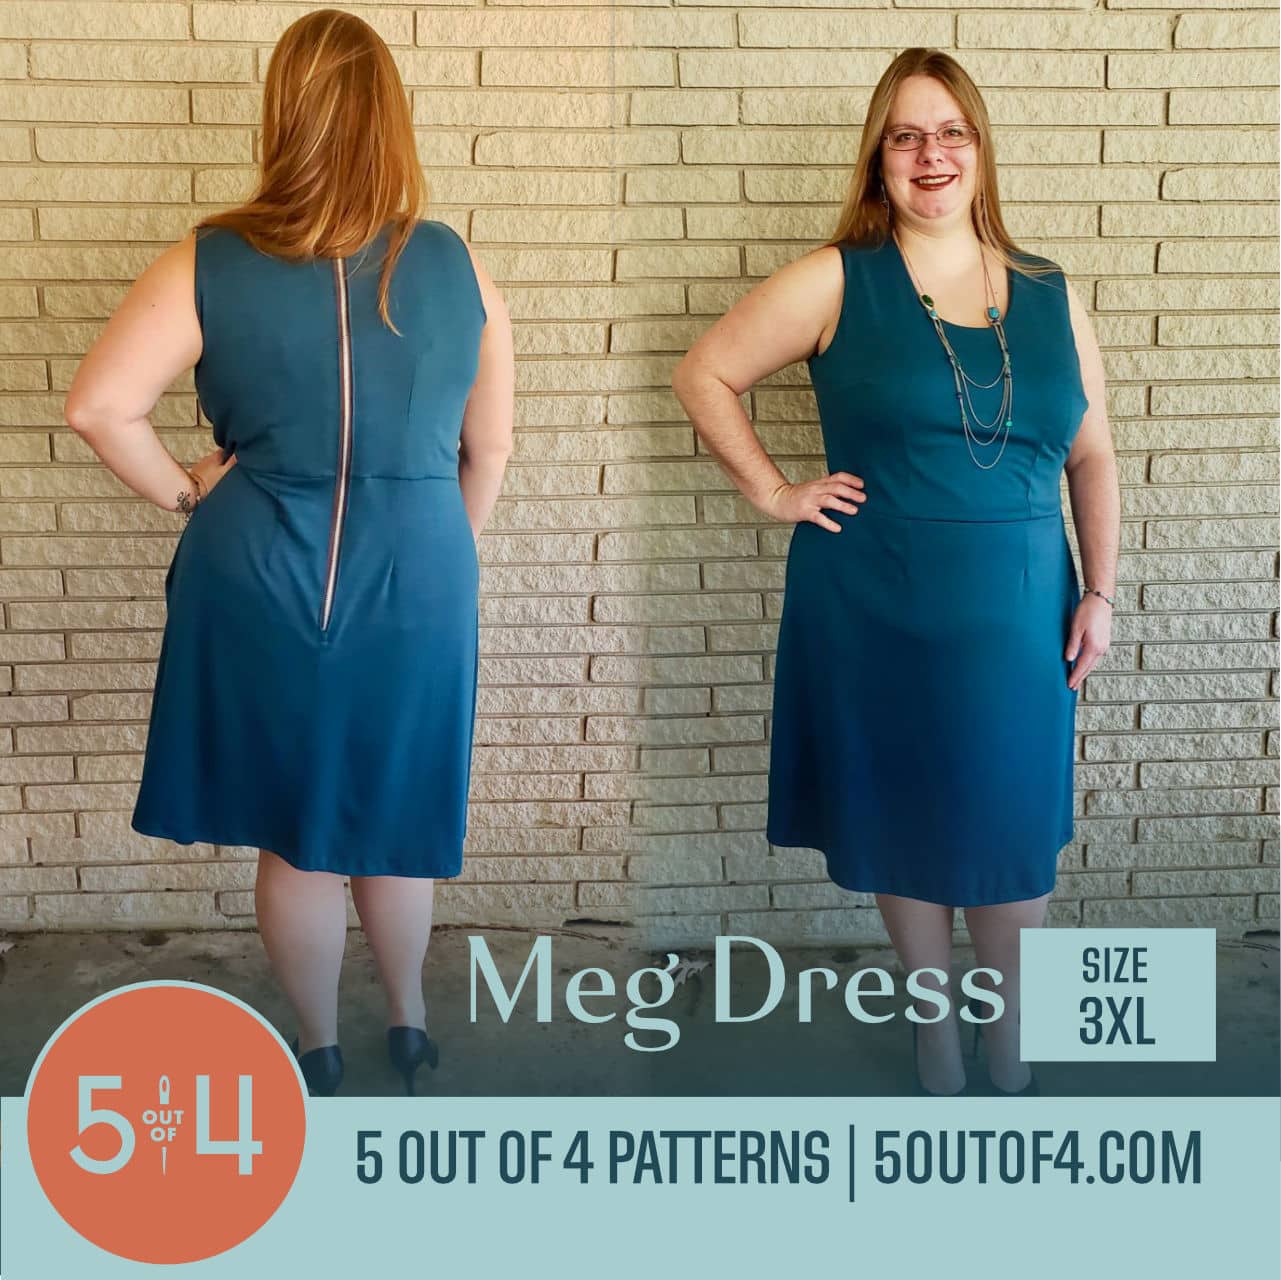 Meg Dress - 5 out of 4 Patterns